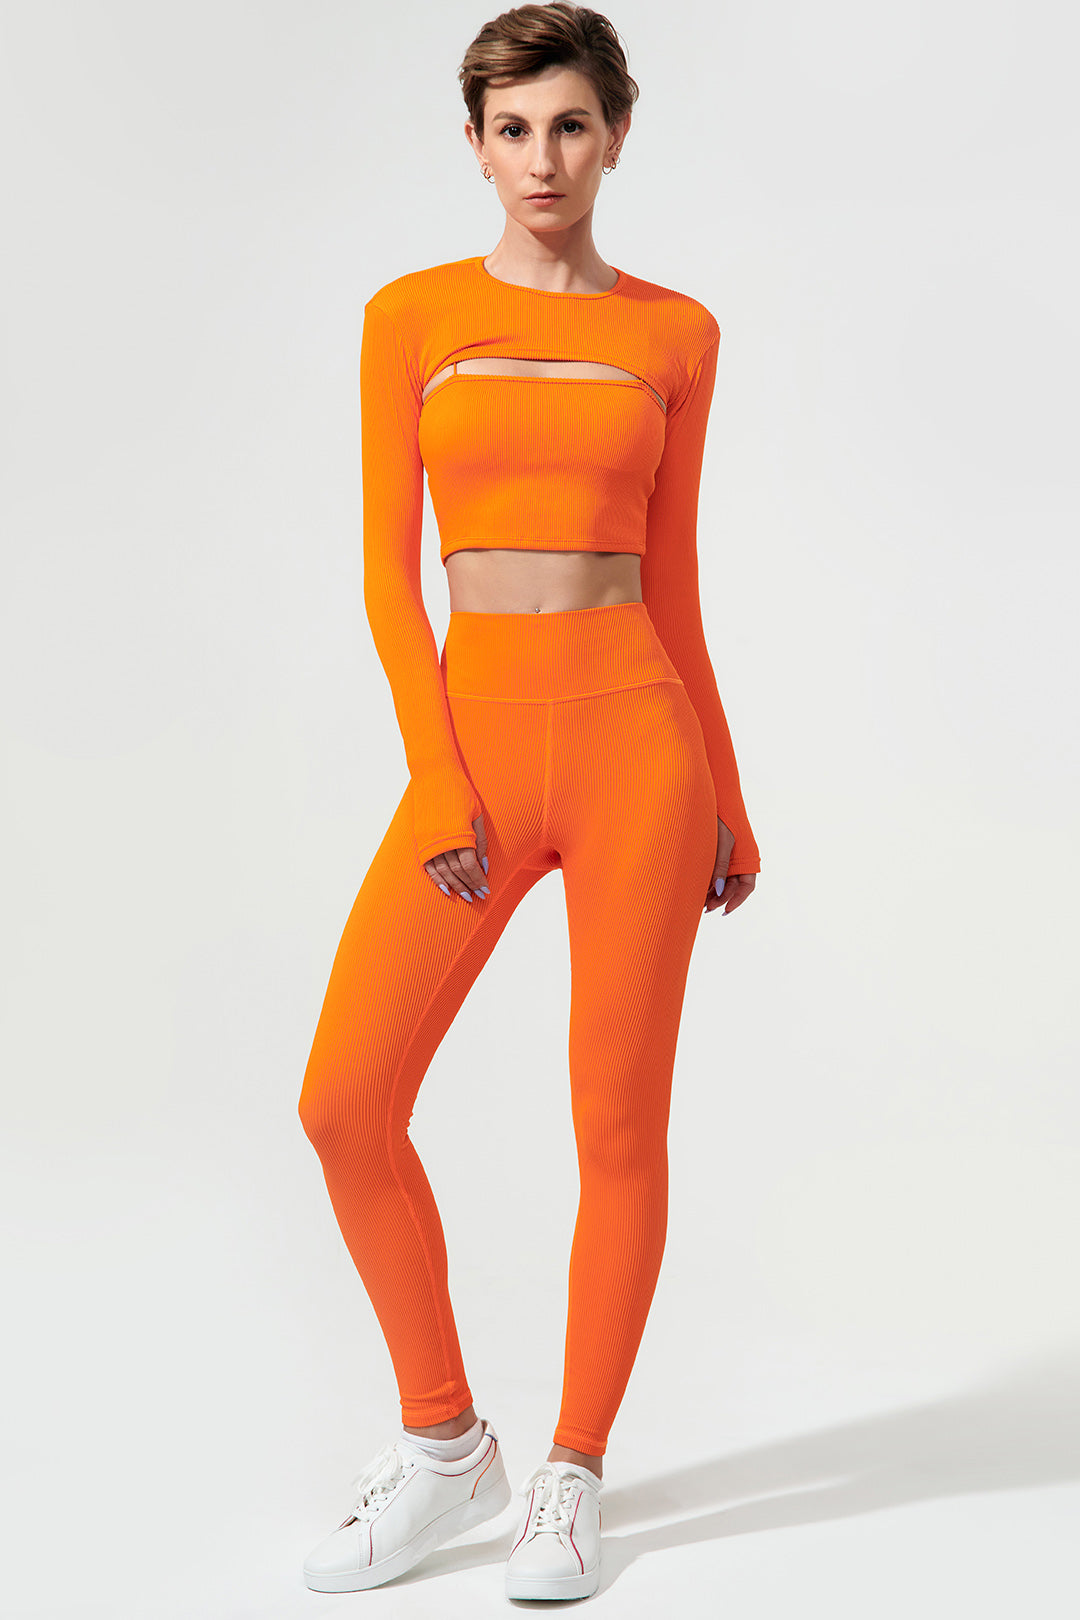 Tangerine Womens TOP SZ Large Activewear Long Sleeve Scrunch Lightweight  orange